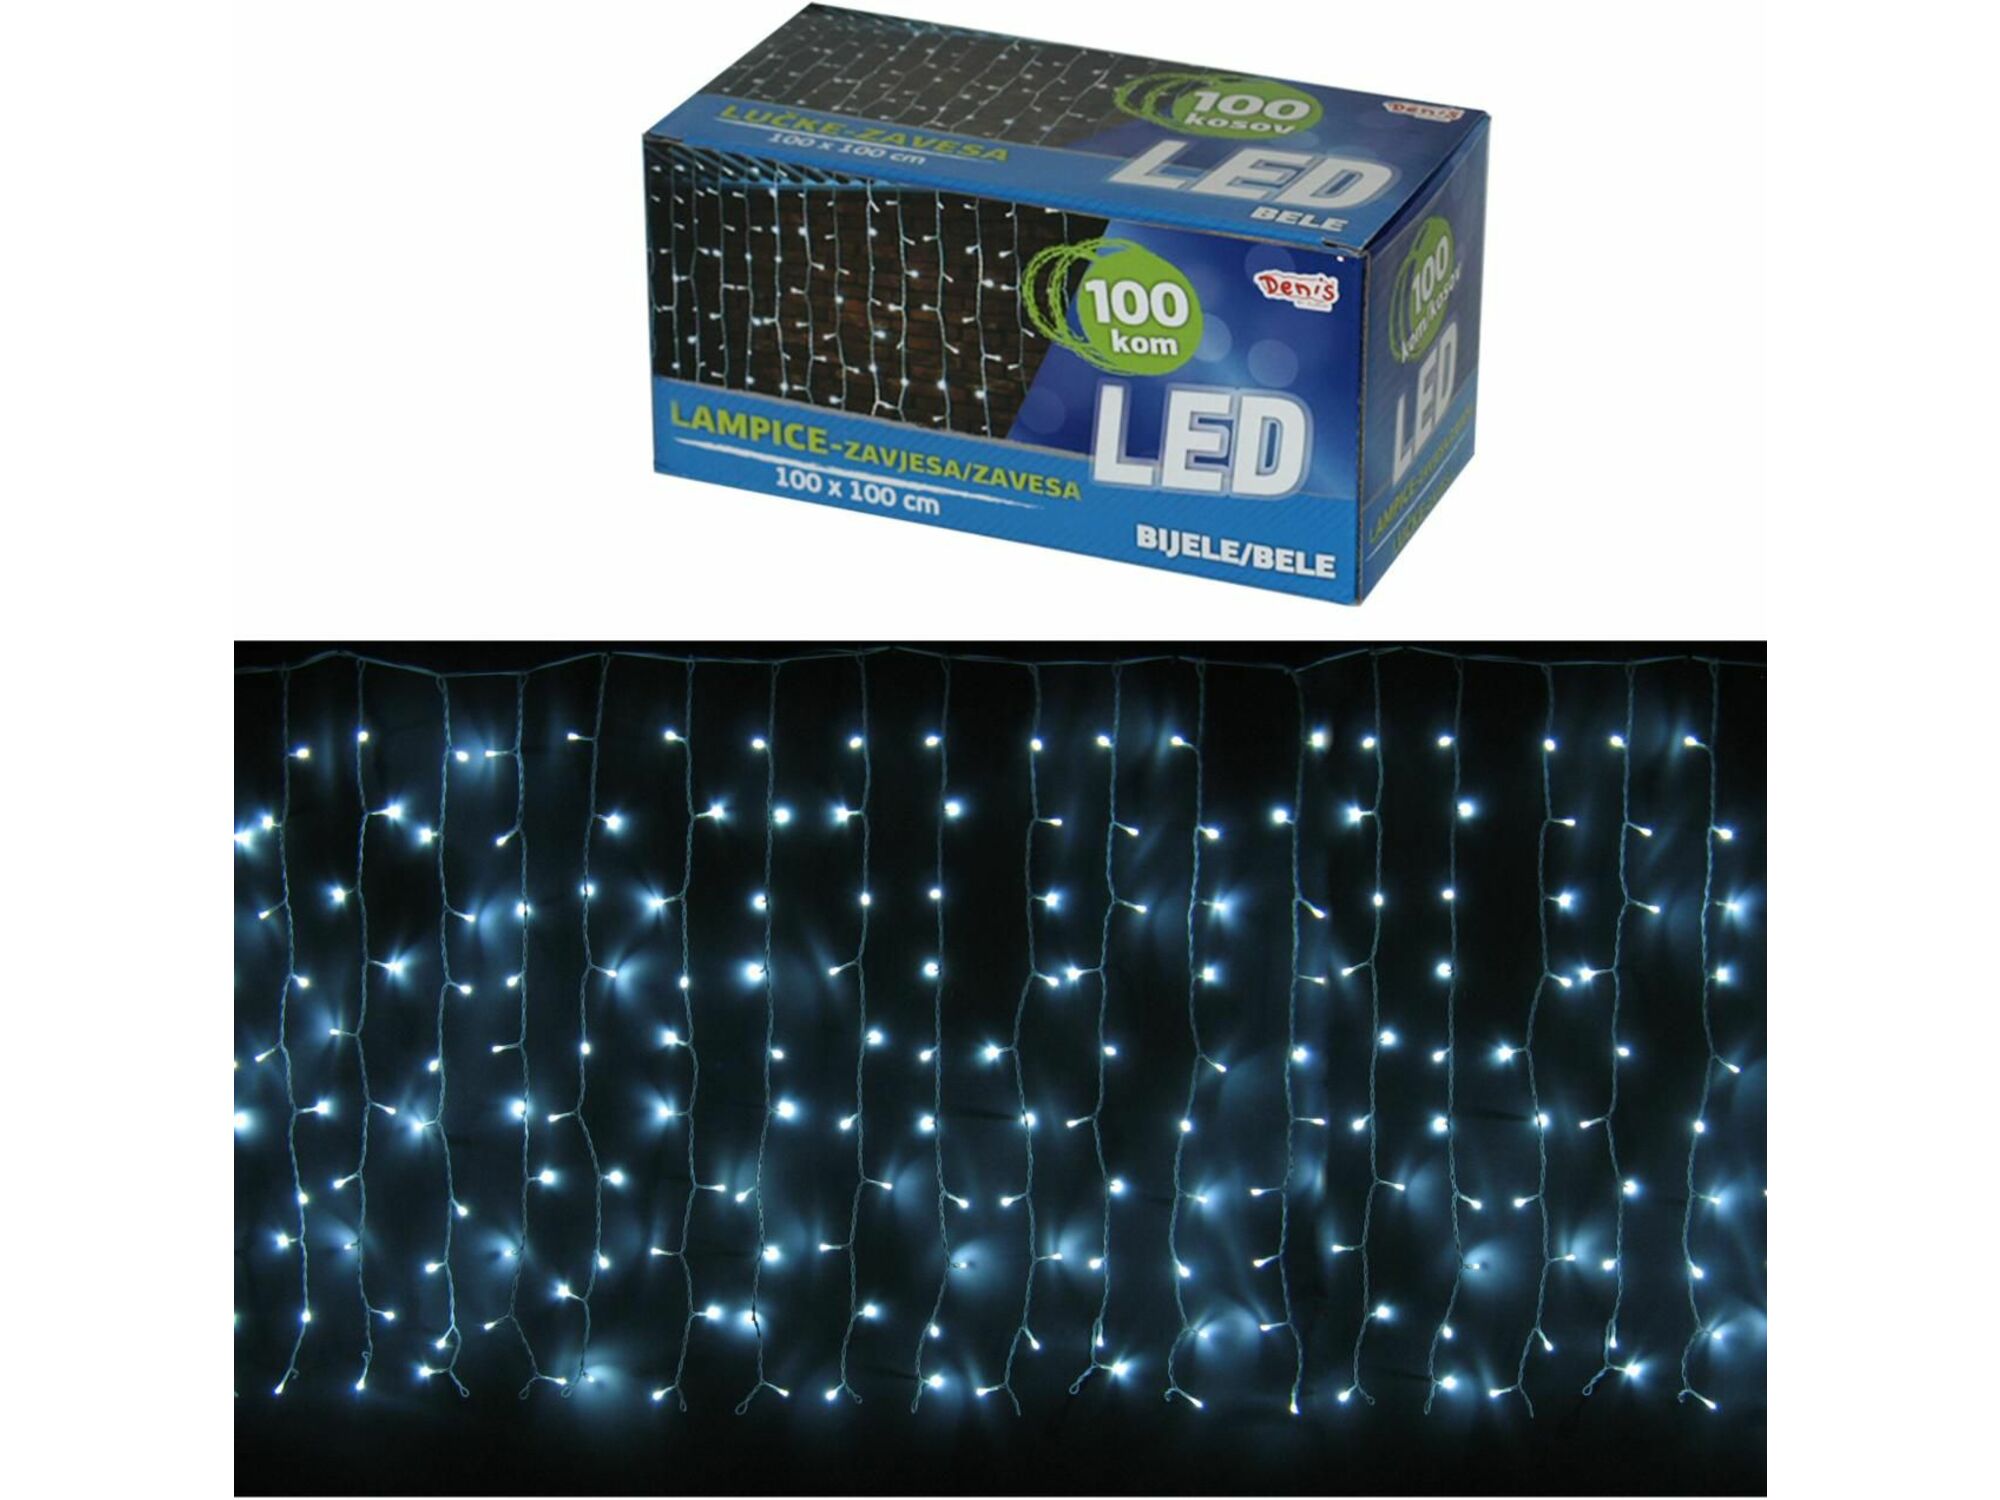 LED lampice zavesa 100 kom 52-180000